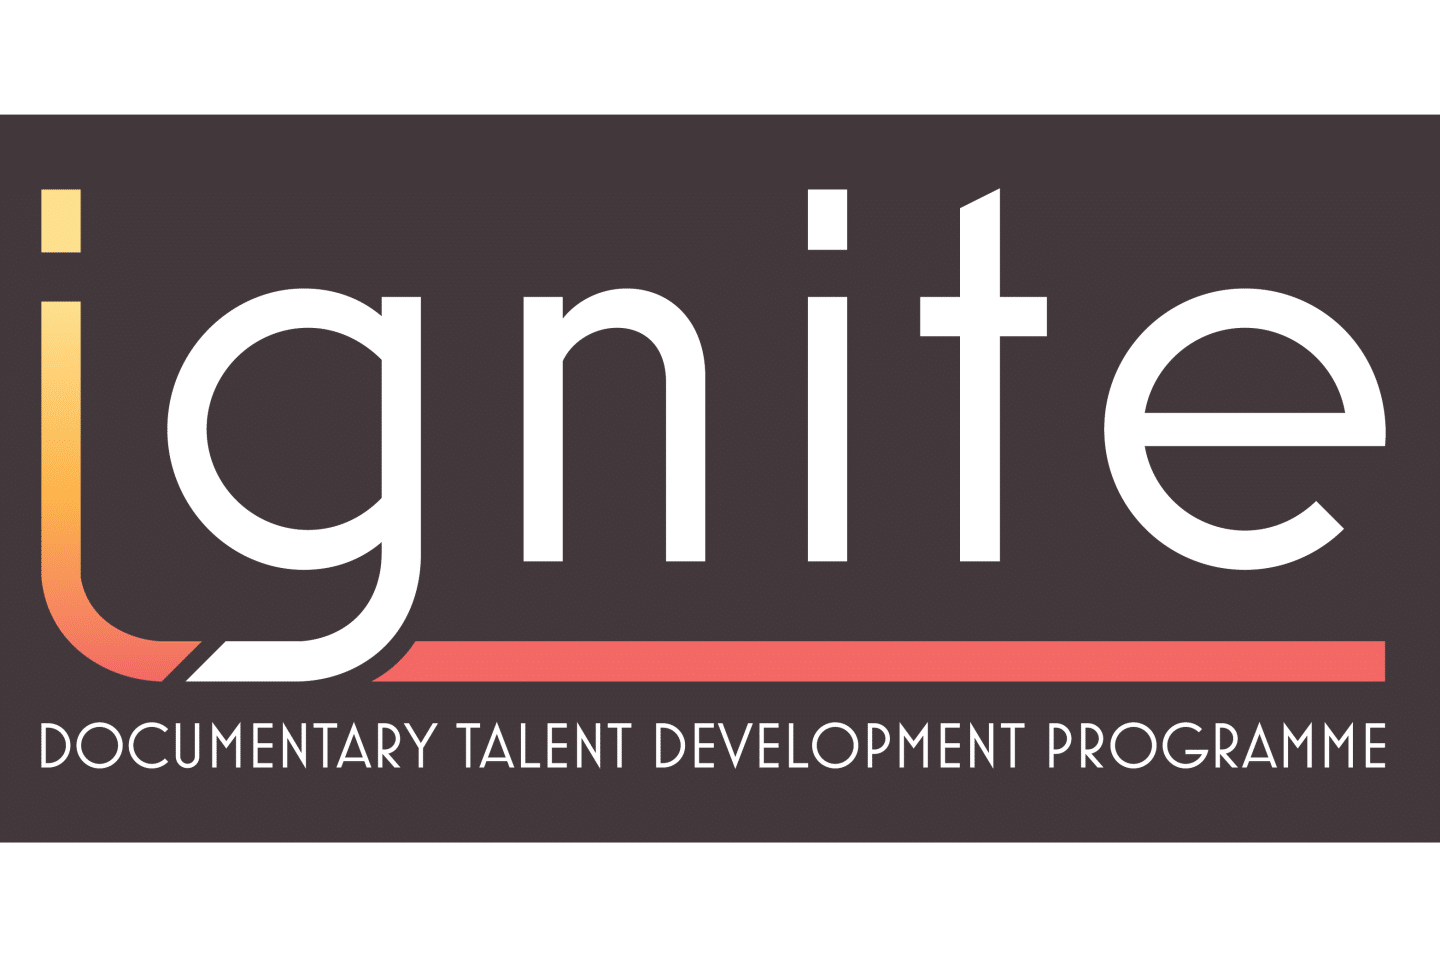 Ignite Logo With Background